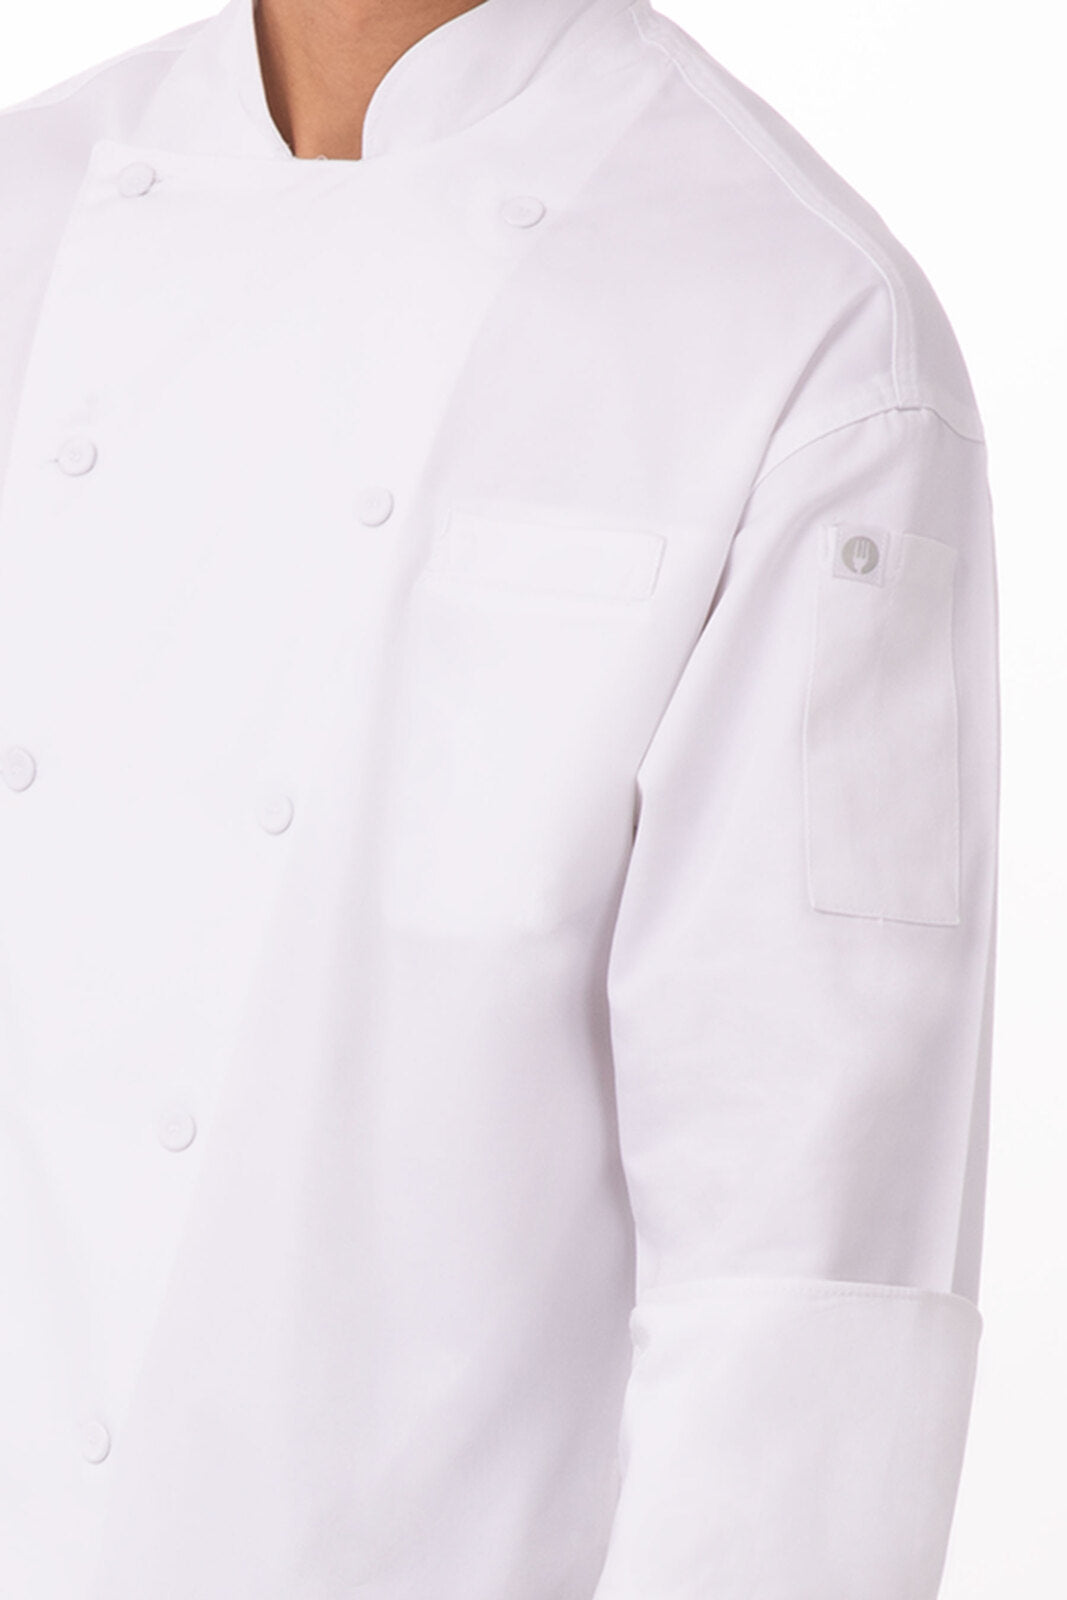 Chef Works - Lyon Executive Chef Jacket